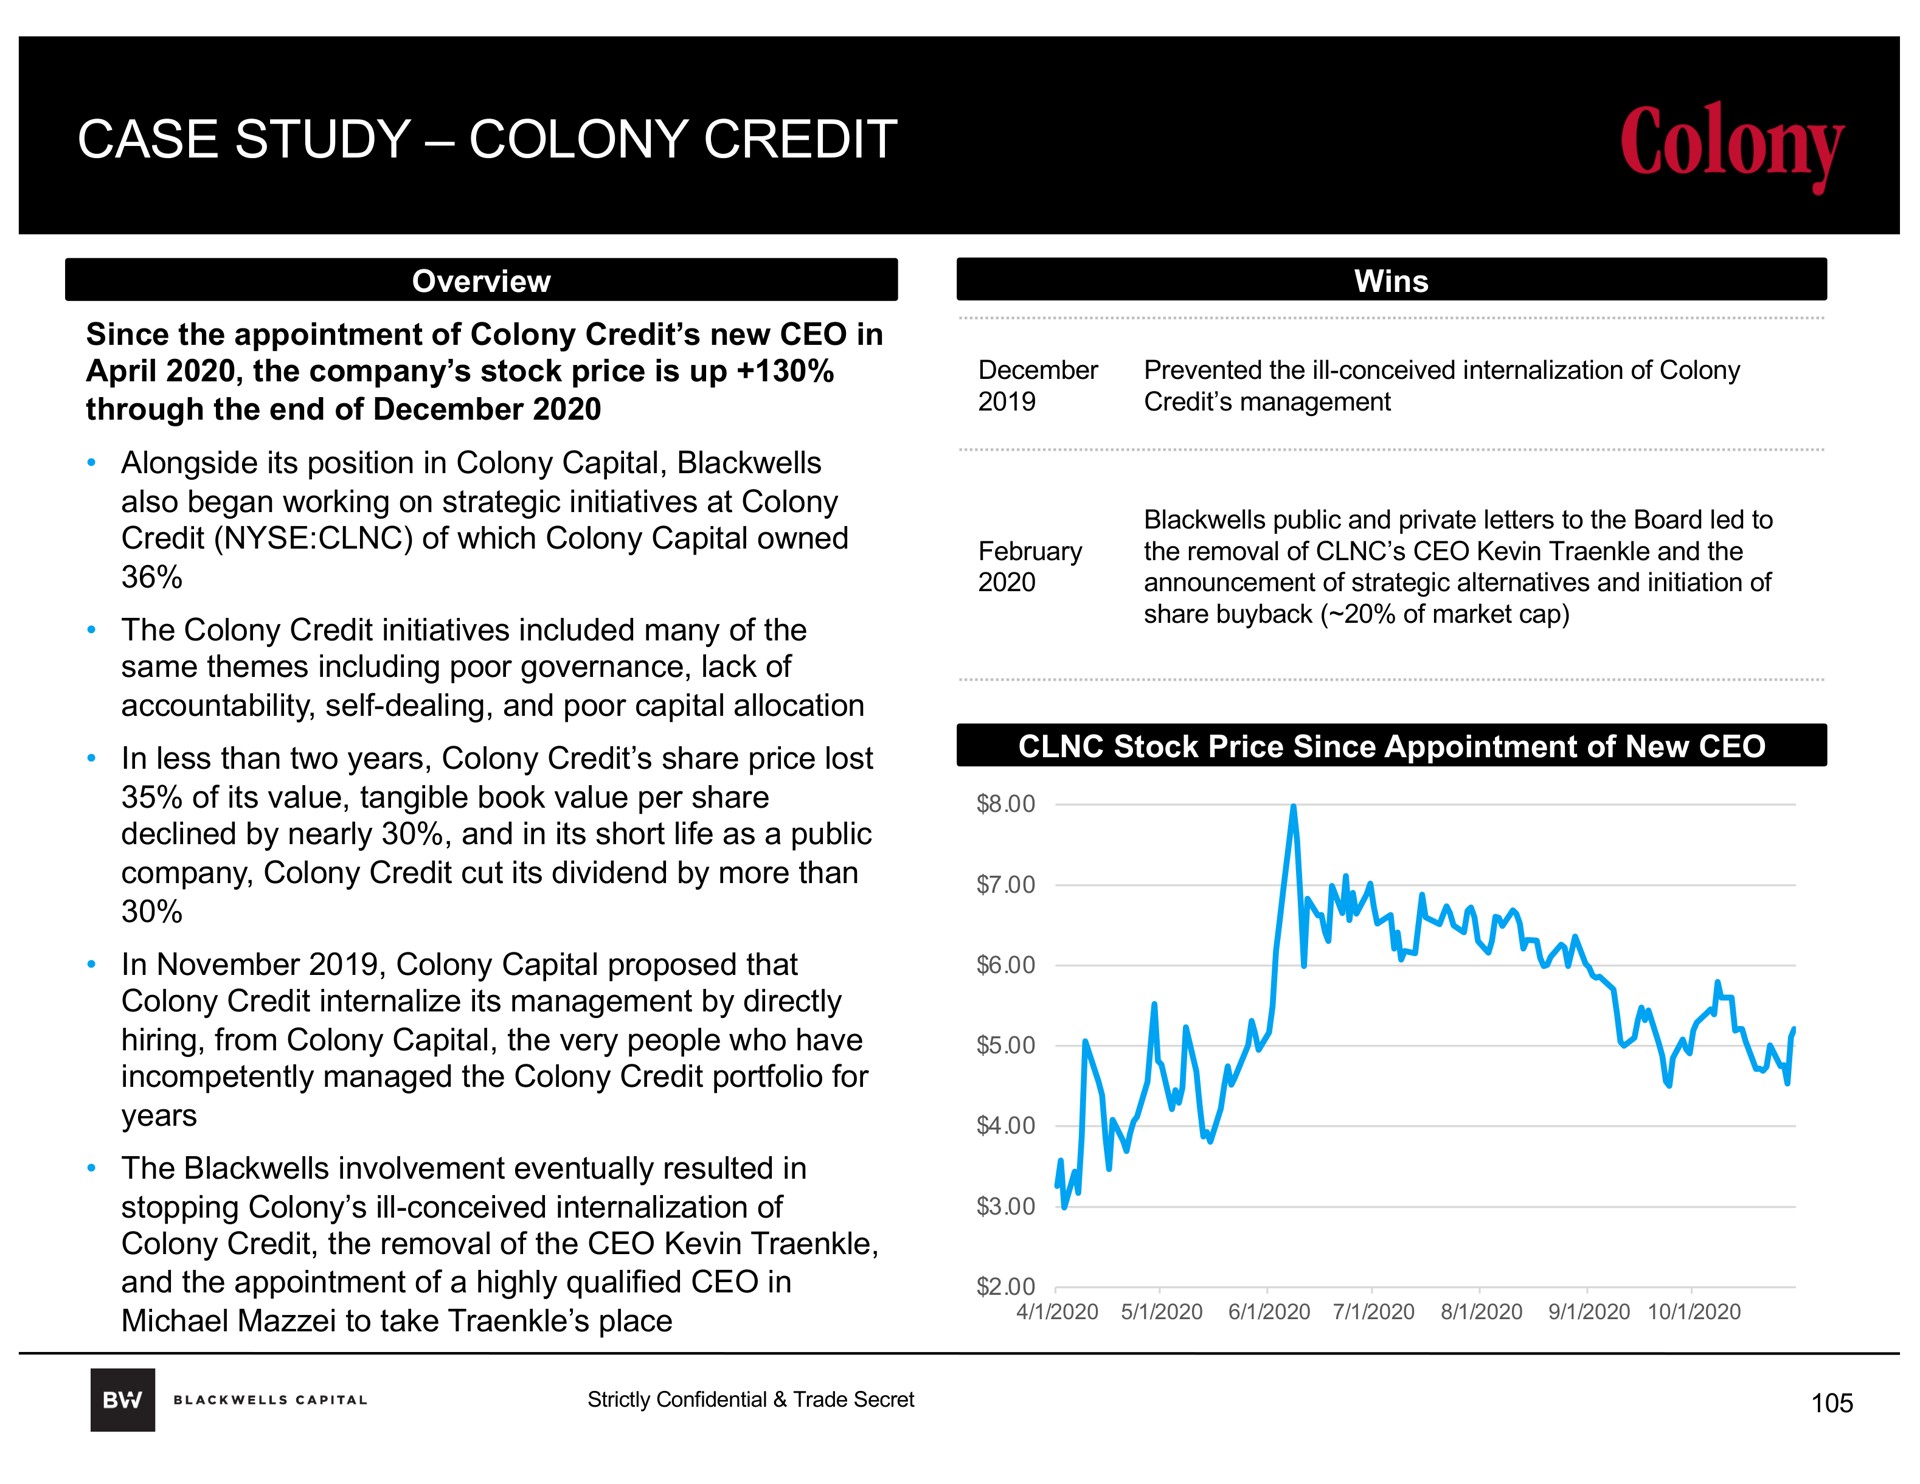 case study colony credit | Blackwells Capital